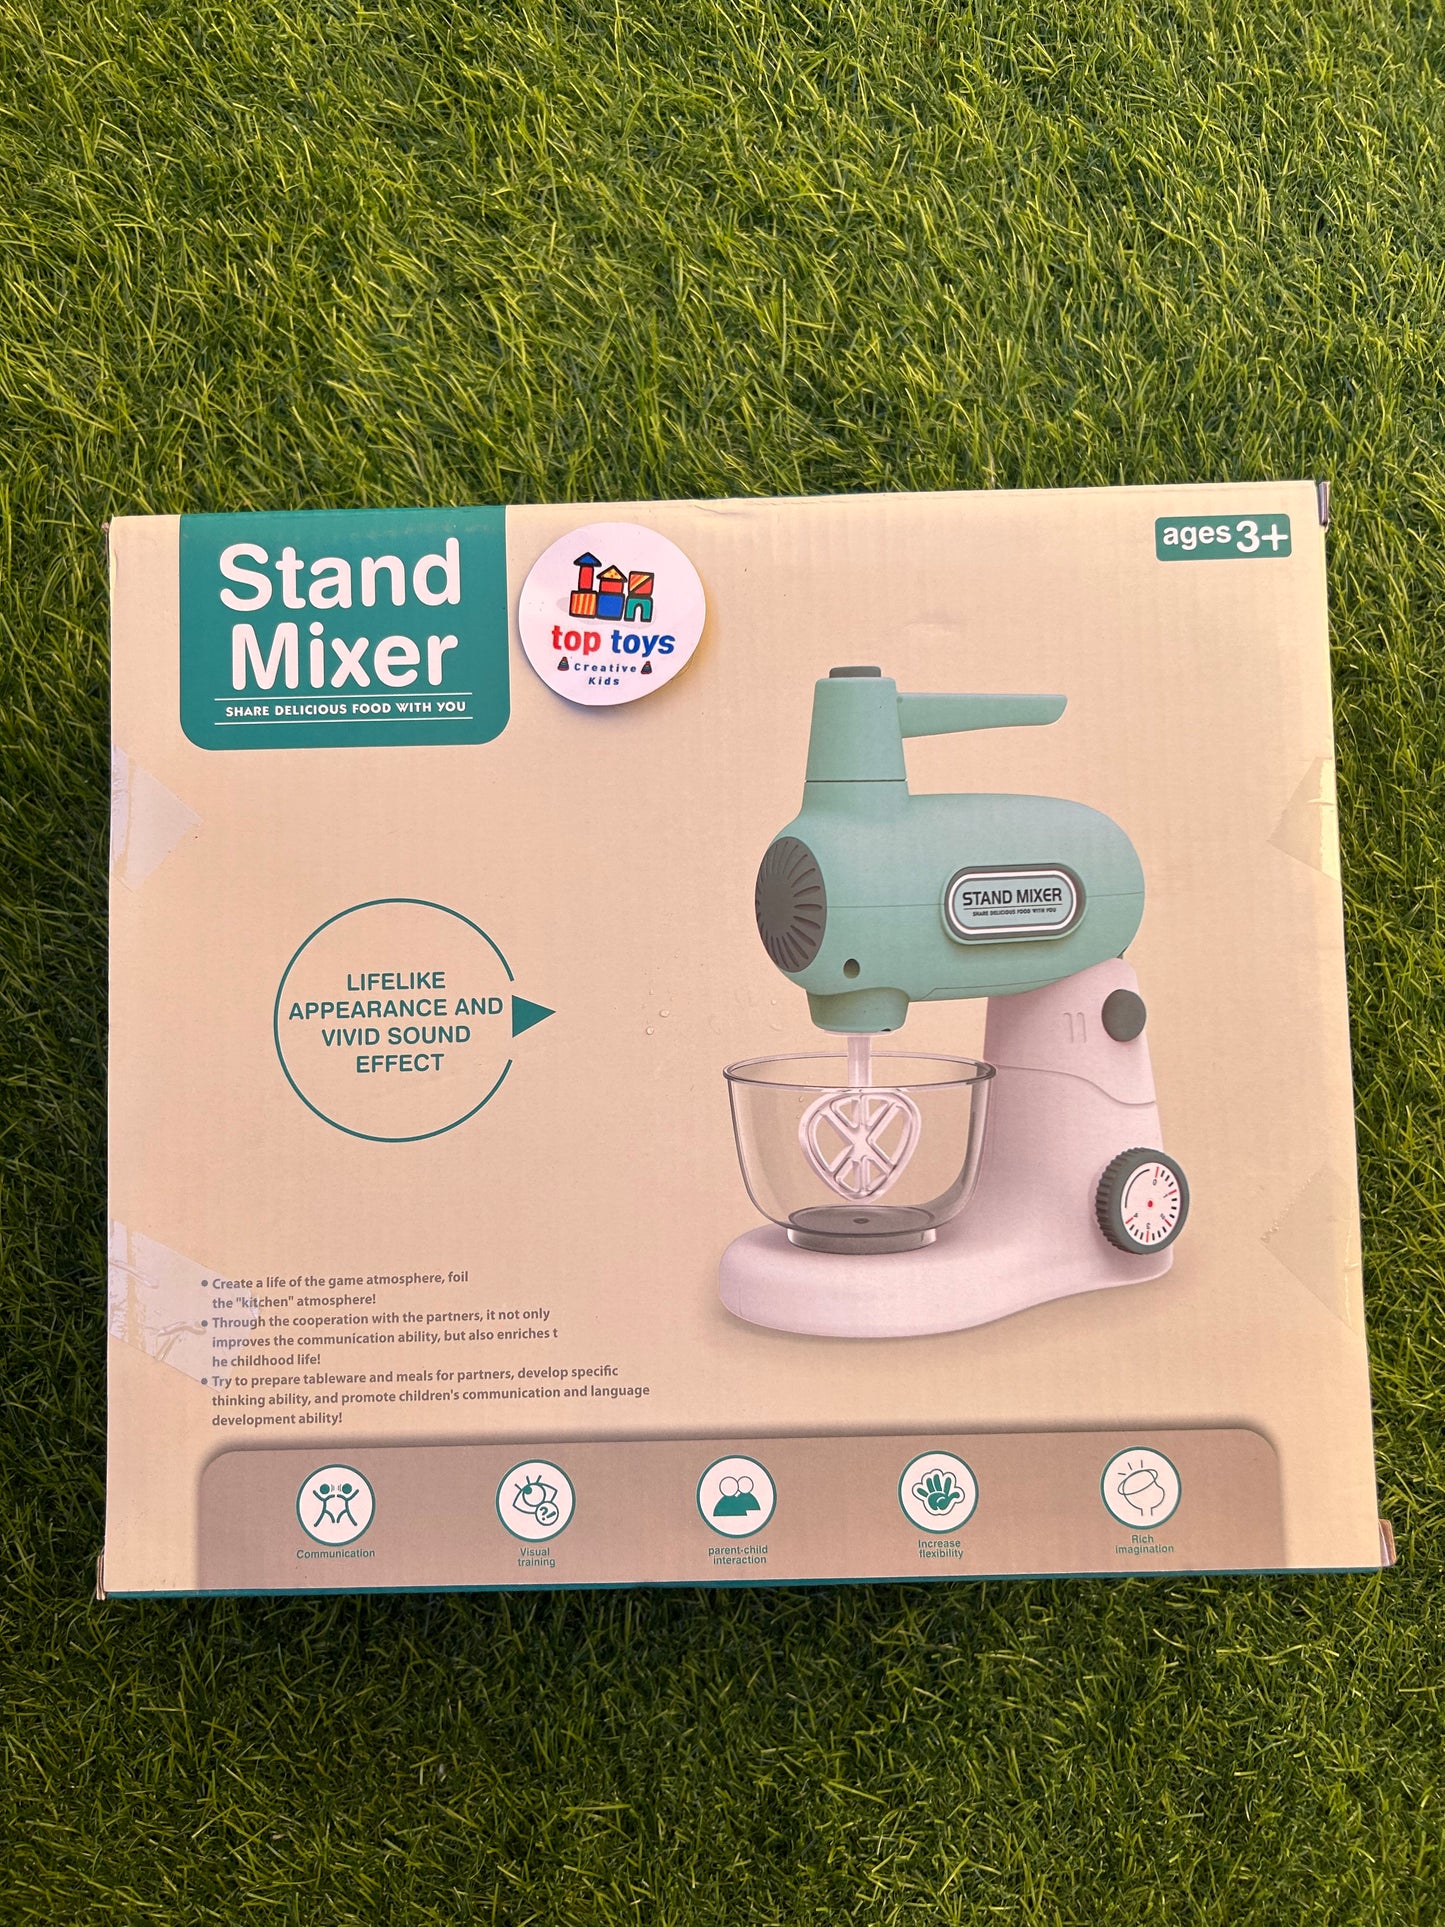 Stand mixer